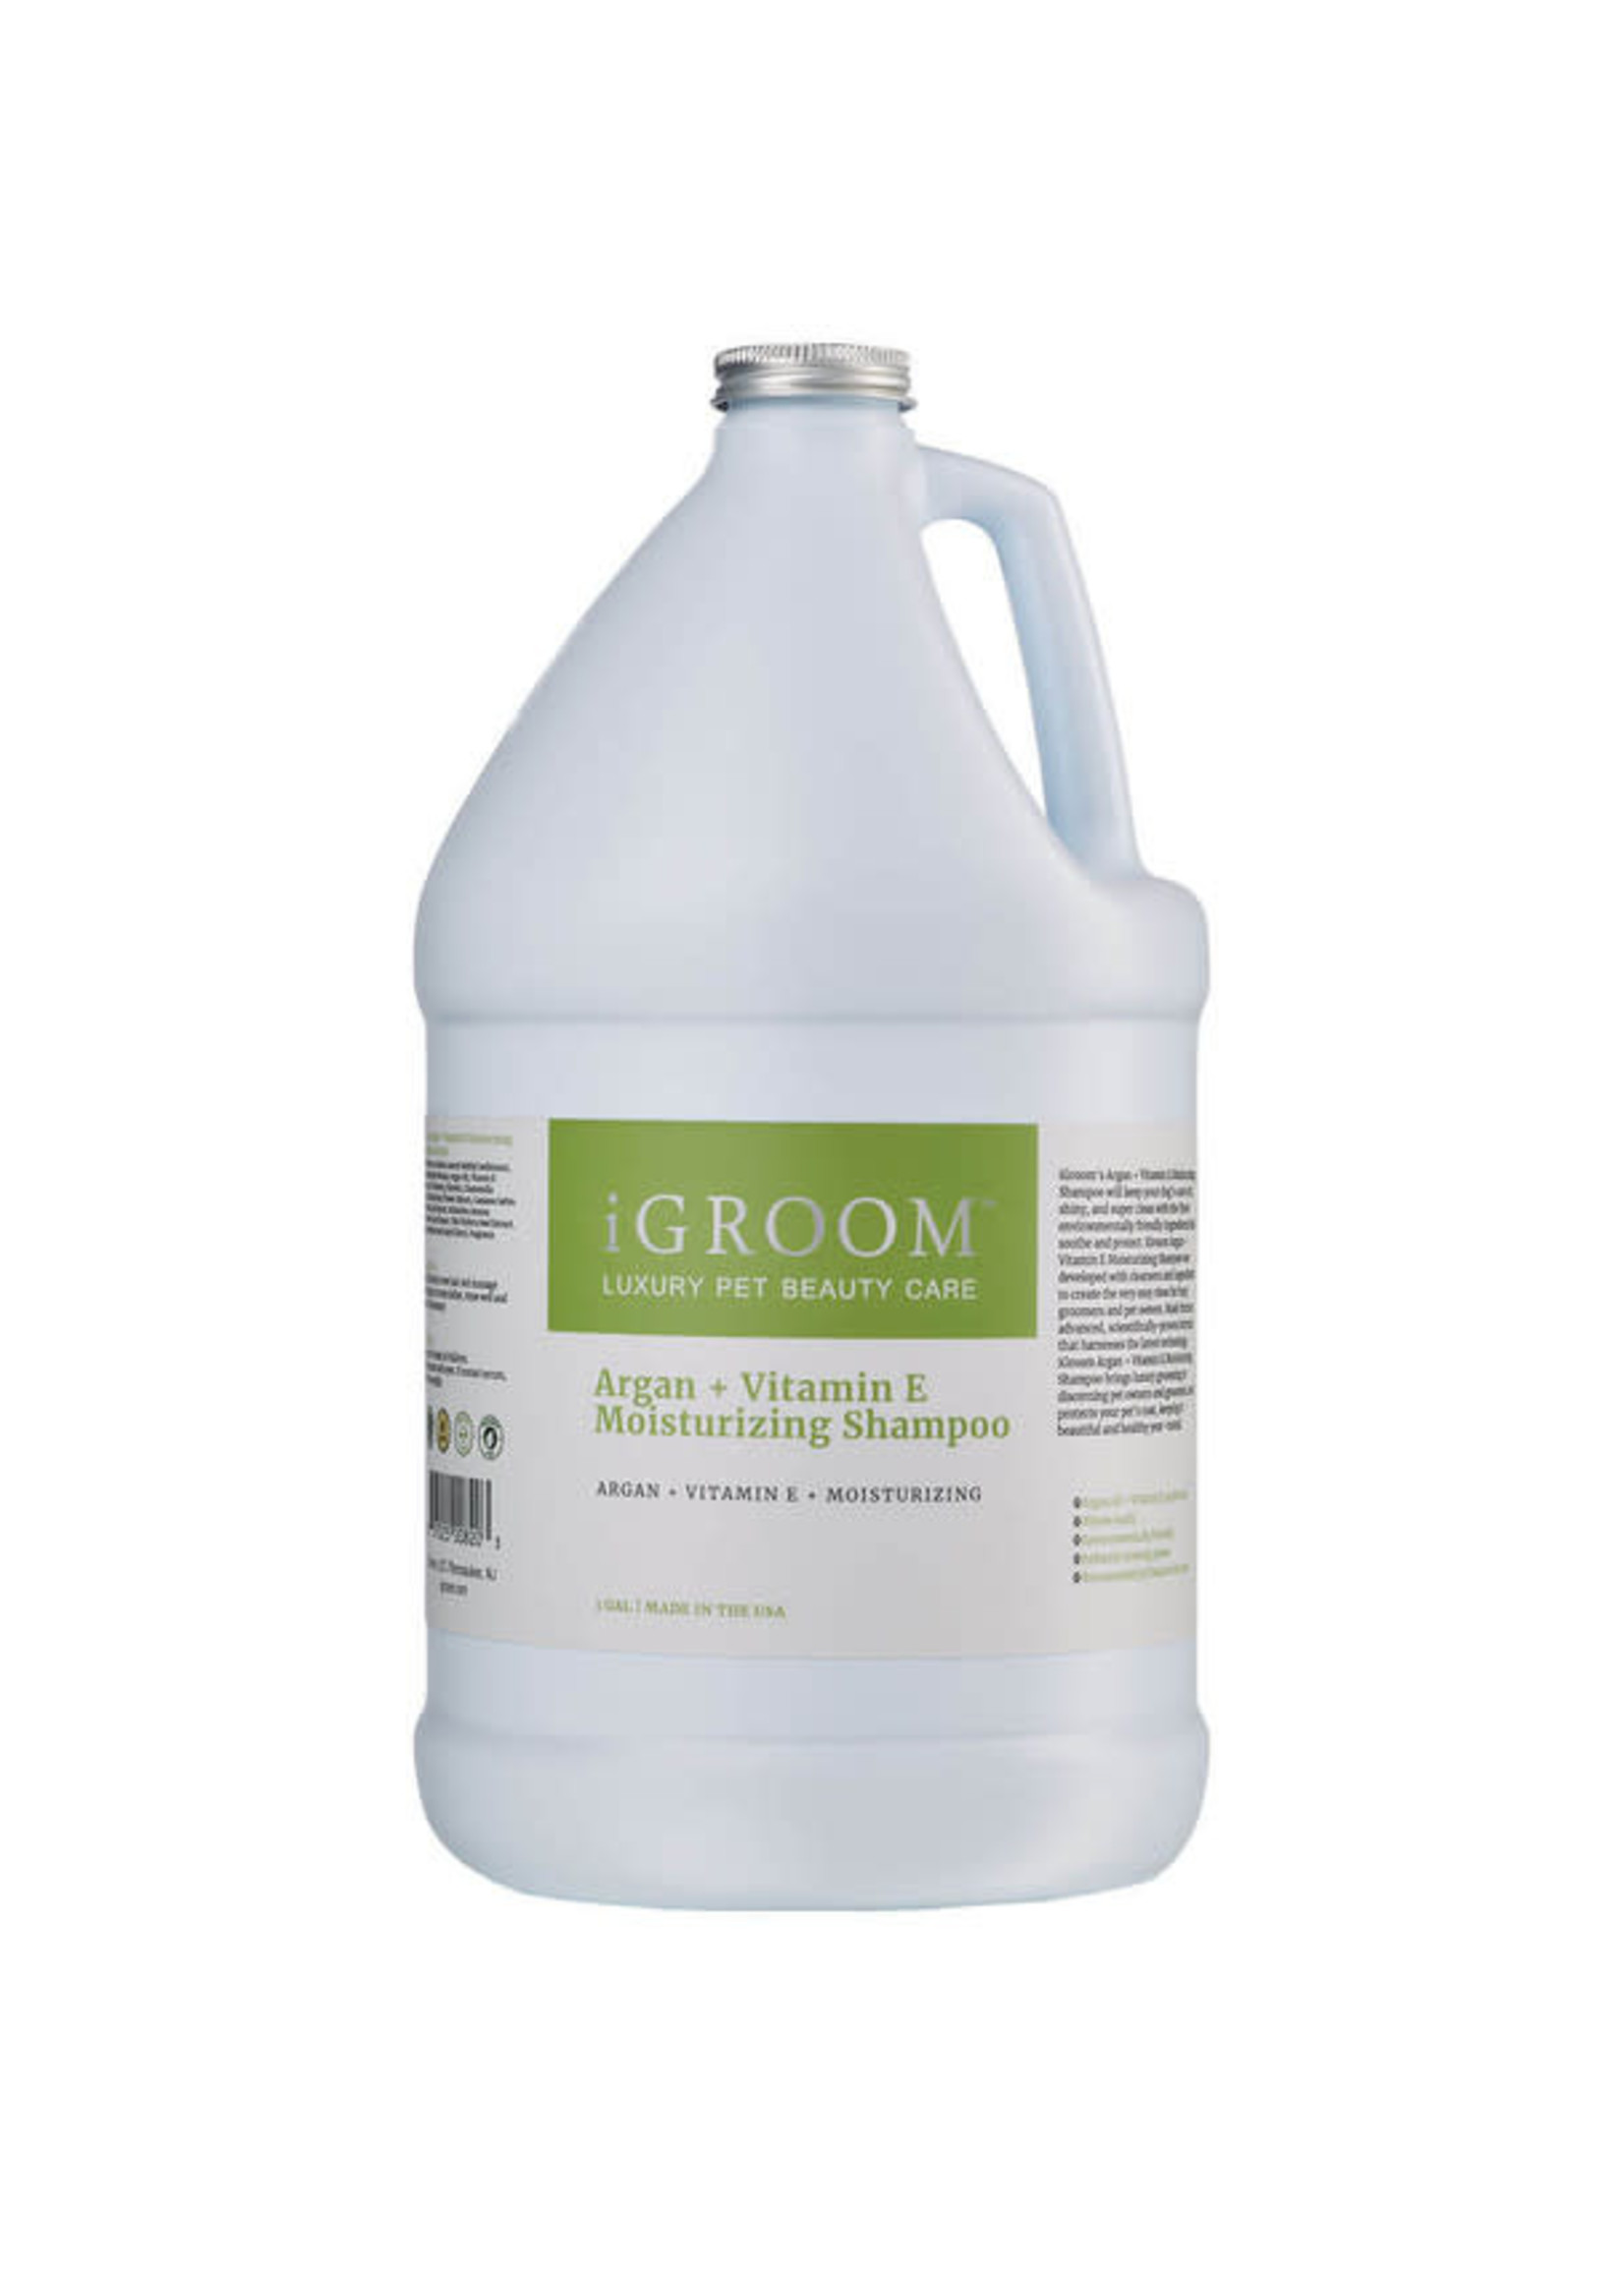 Igroom iGroom Argan+Vitamin E Moisturizing Shampoo Gallon